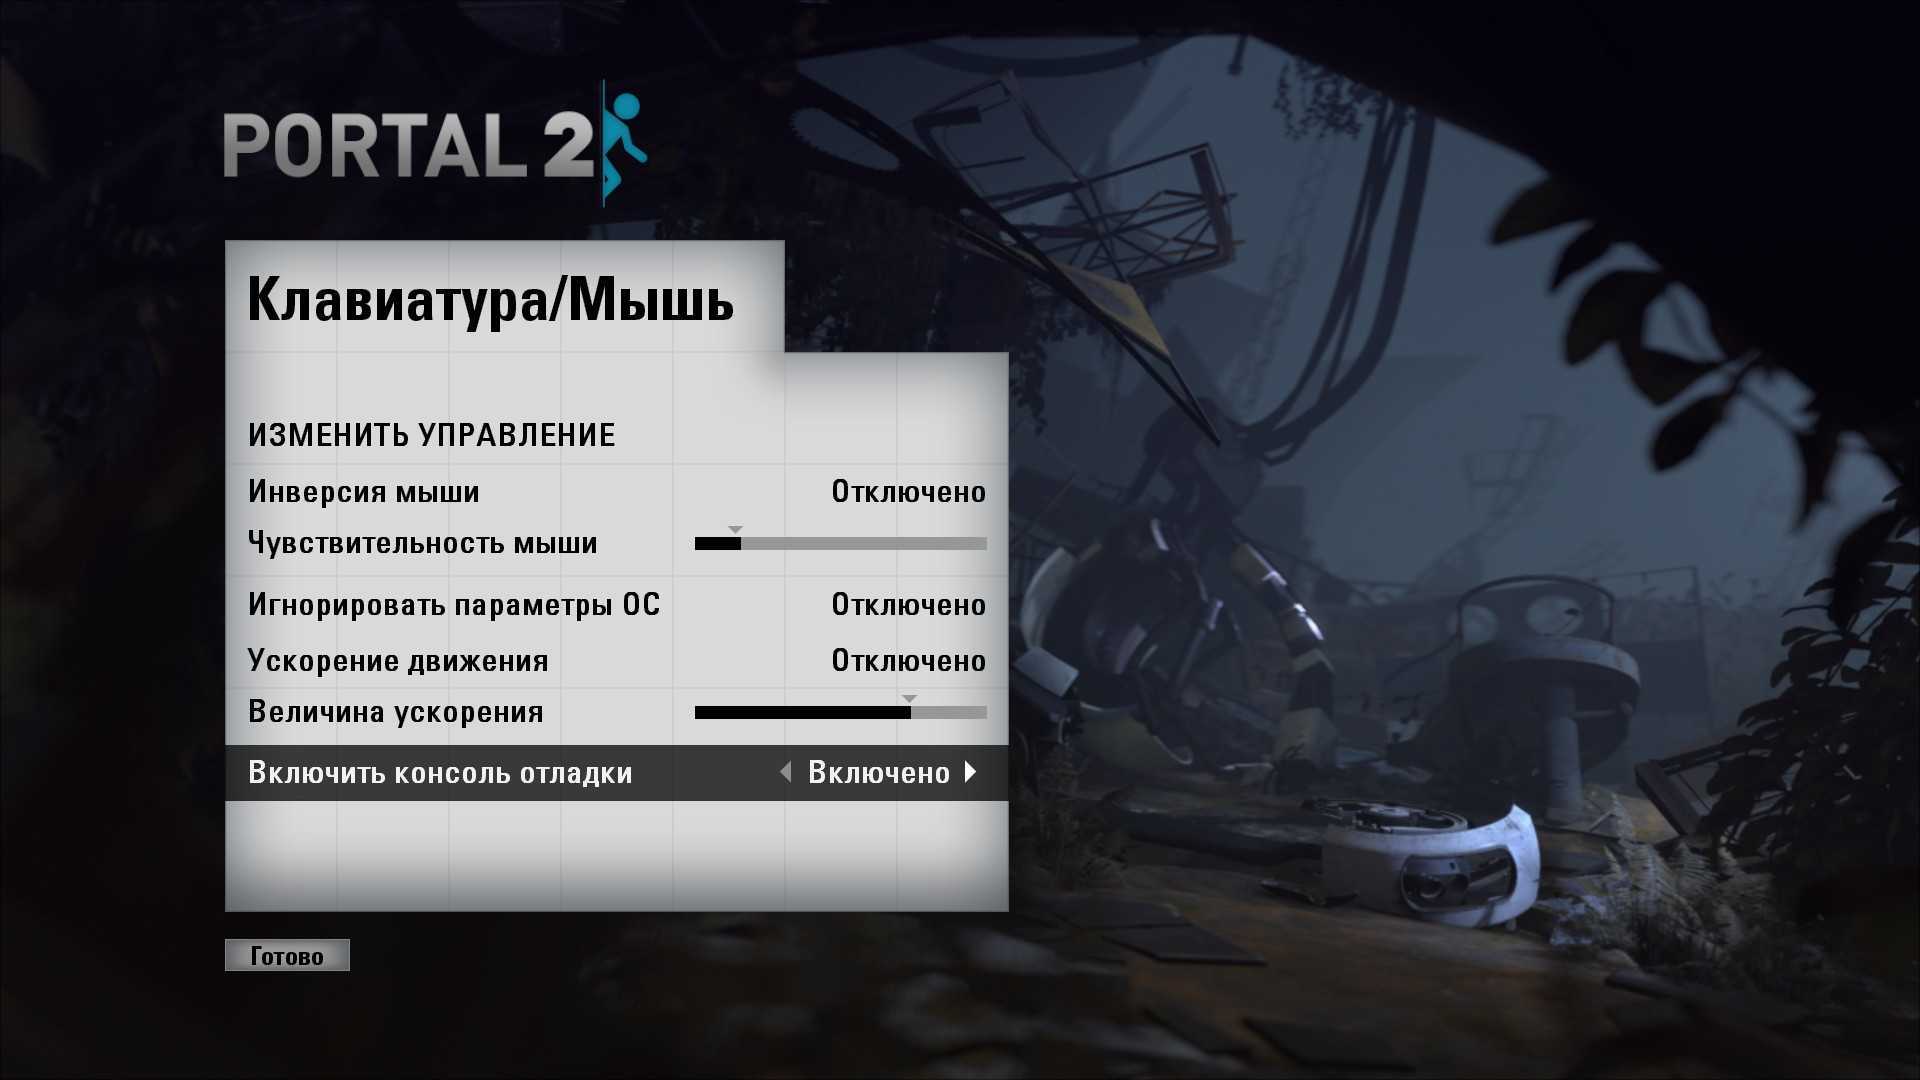 Portal 2 all console commands are фото 6